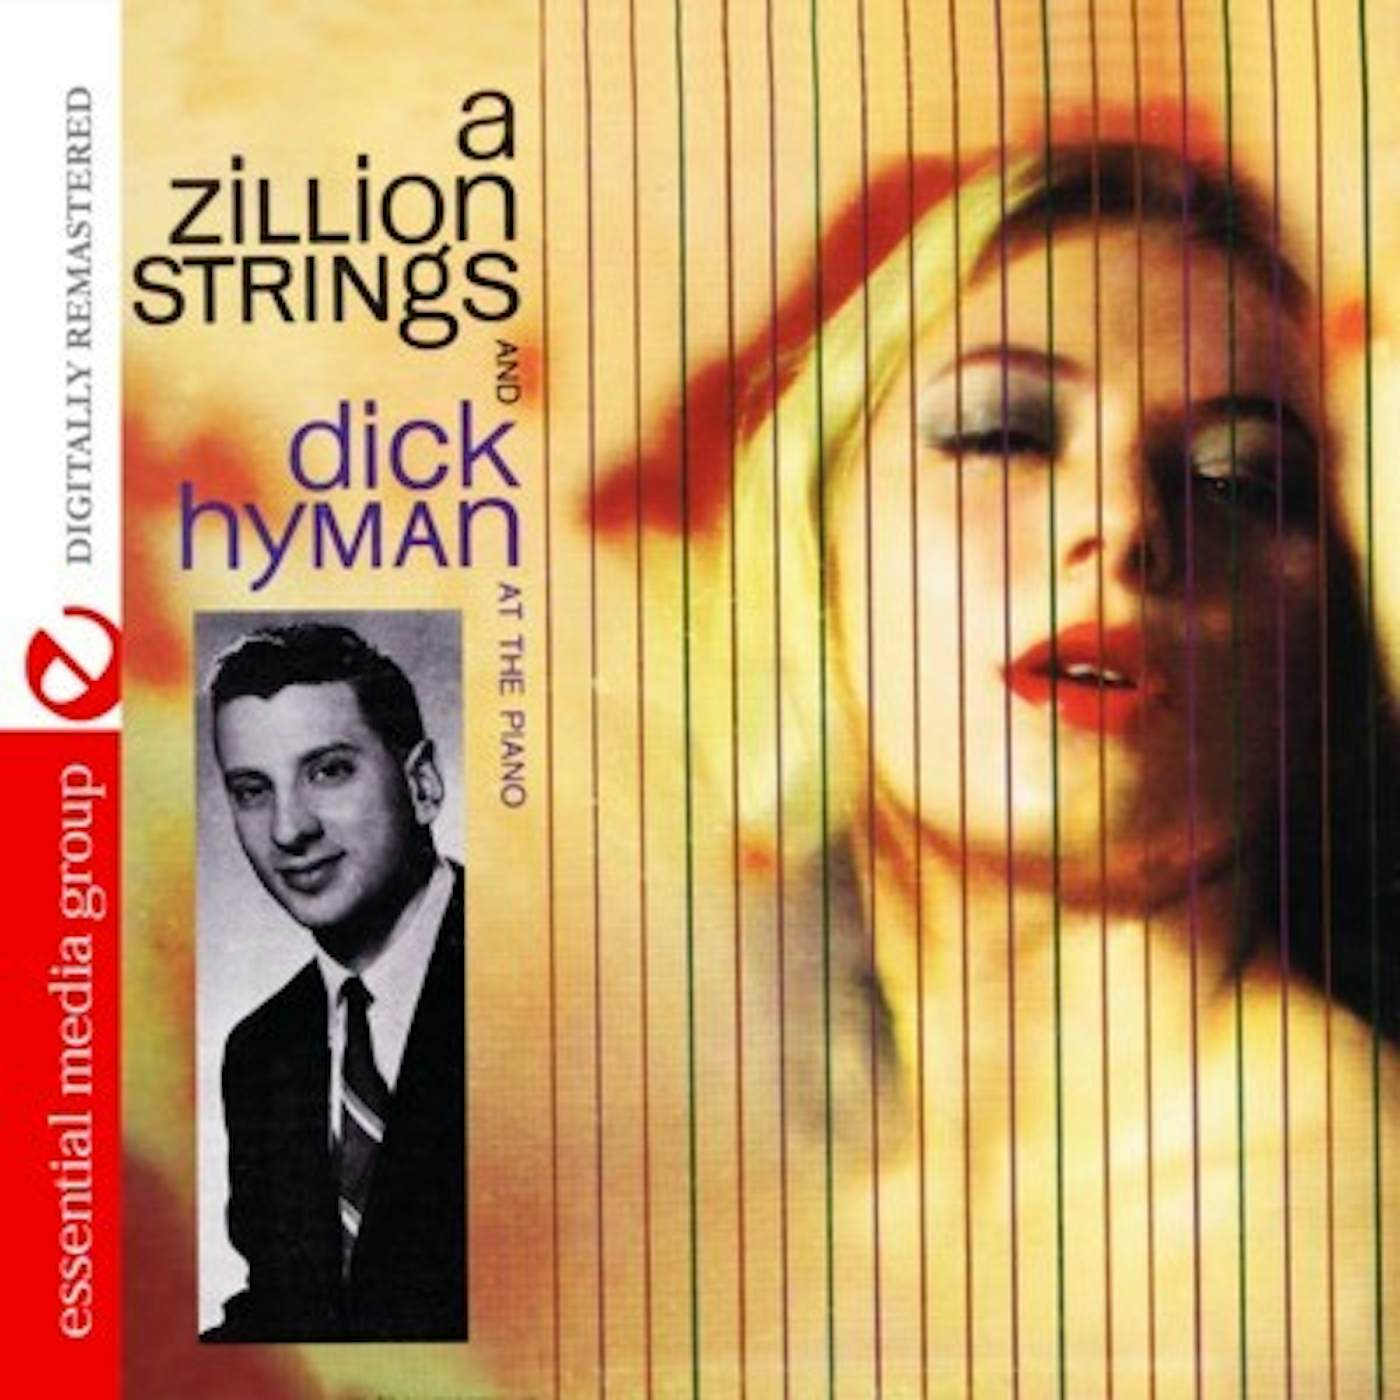 Dick Hyman ZILLION STRINGS CD